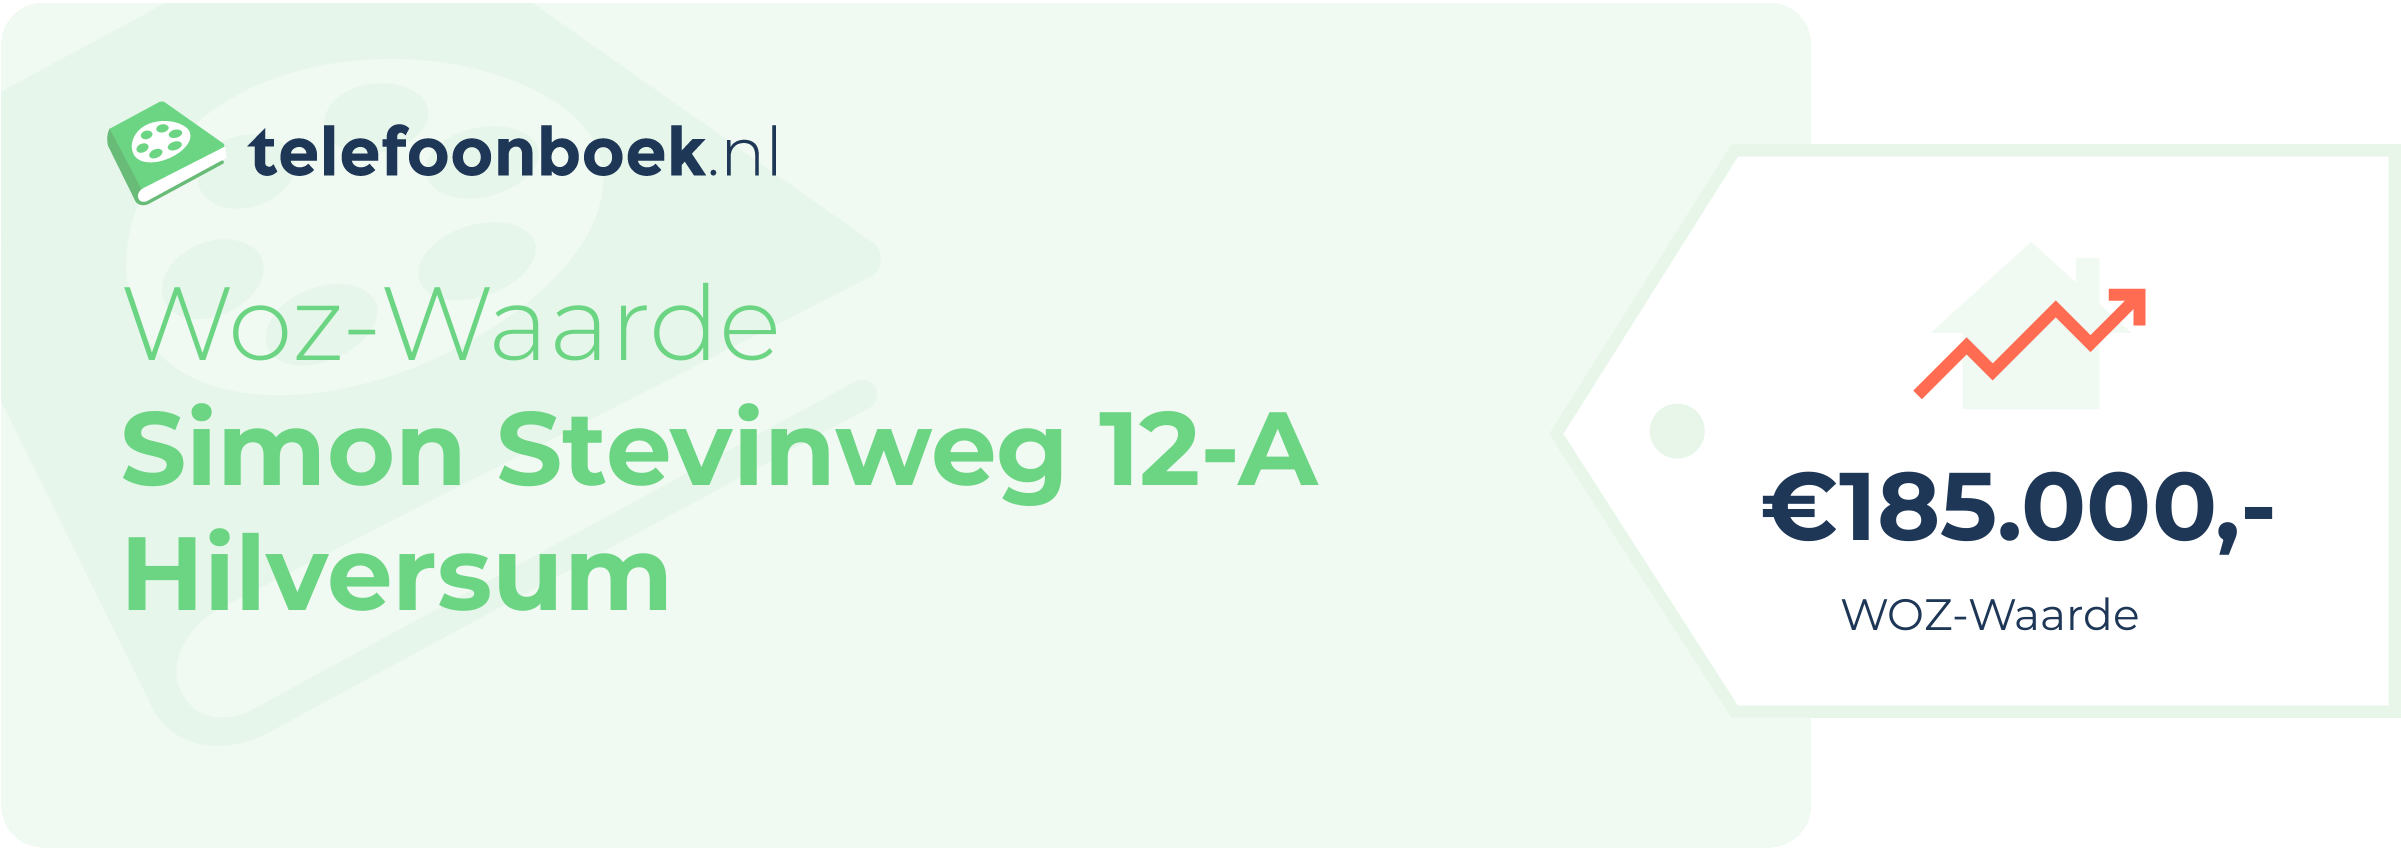 WOZ-waarde Simon Stevinweg 12-A Hilversum